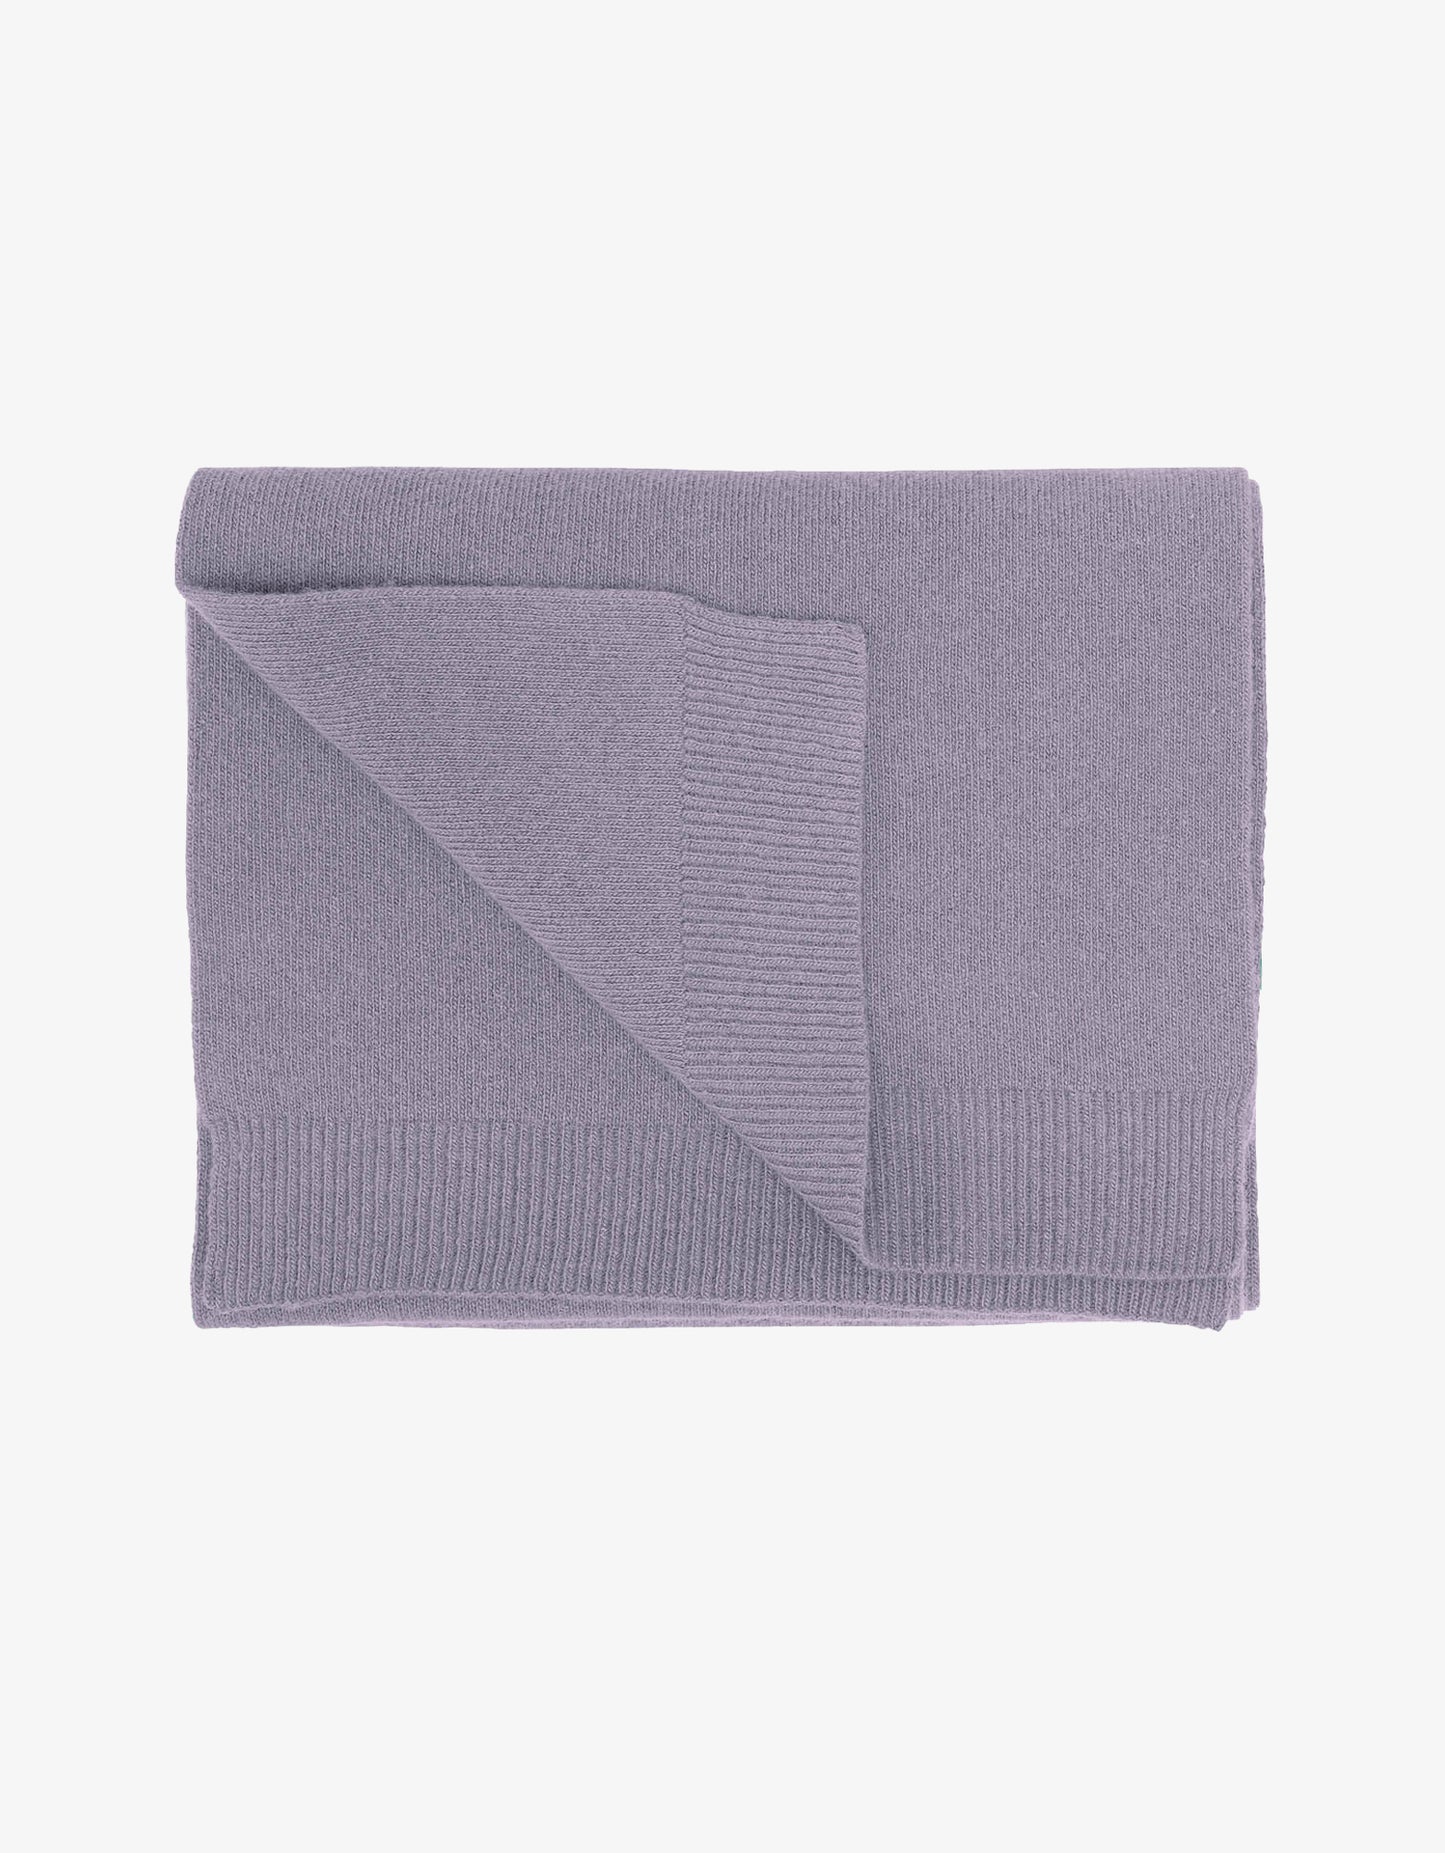 Colorful Standard - Merino Wool Scarf - Purple Haze